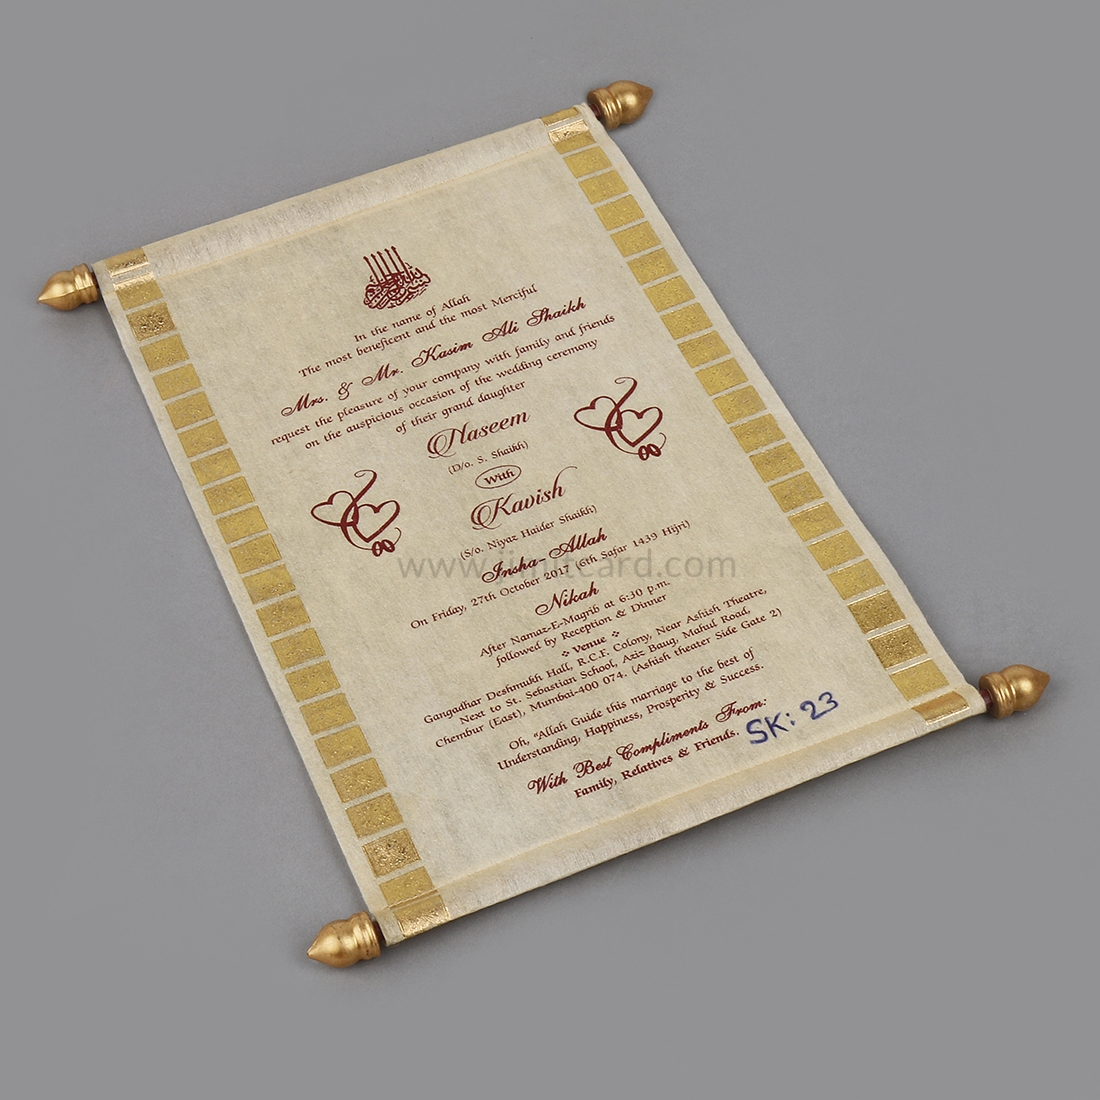 Designer Scroll Wedding Invitation in Golden Wooly Paper-9079